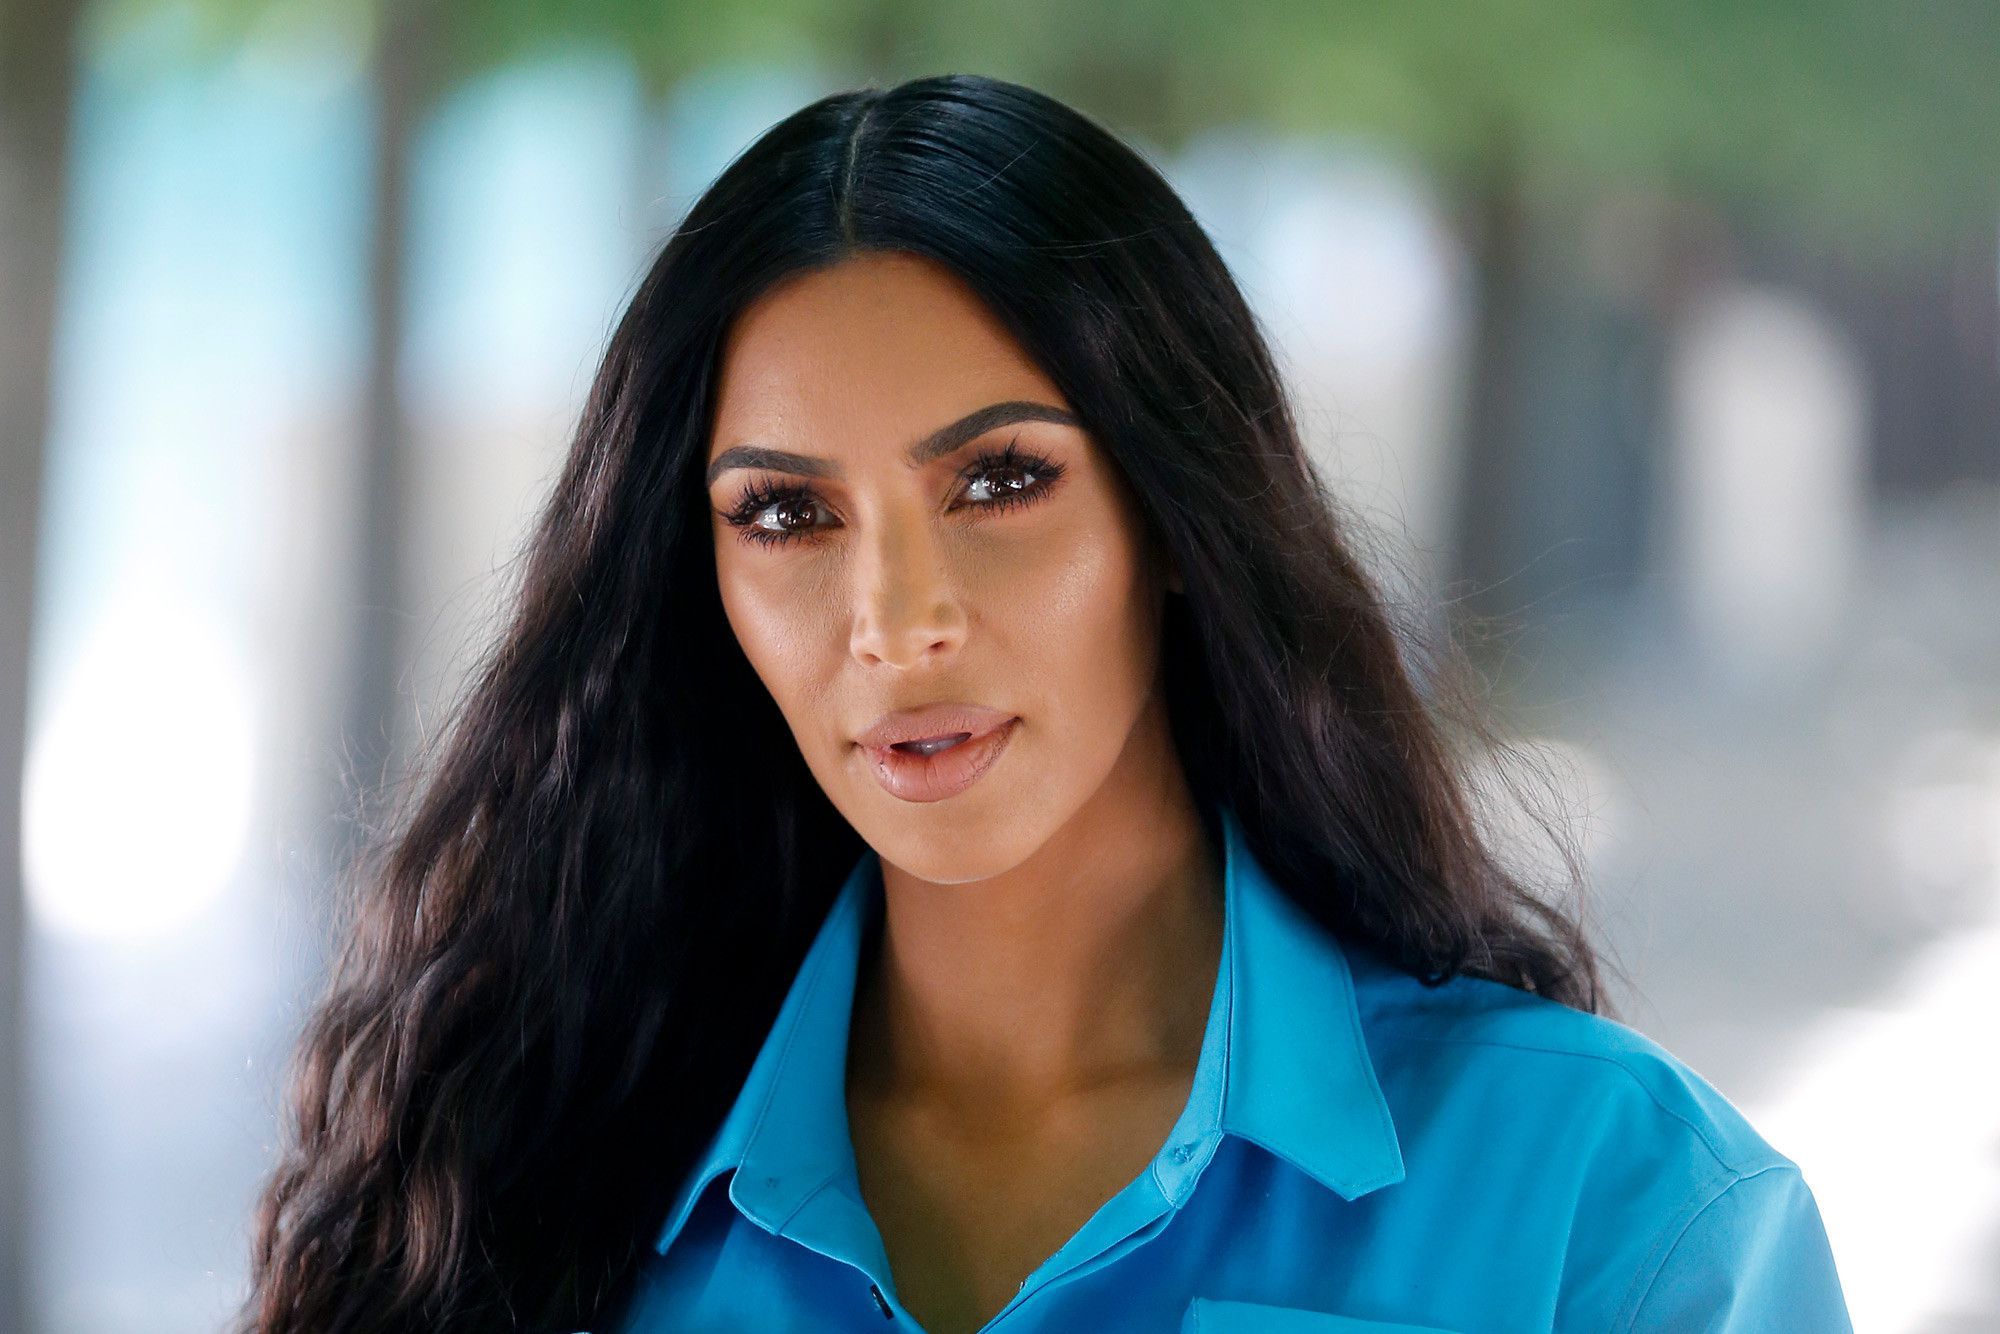 UPDATED: No, Kim Kardashian Does Not Own the Word “Kimono” - The Fashion Law